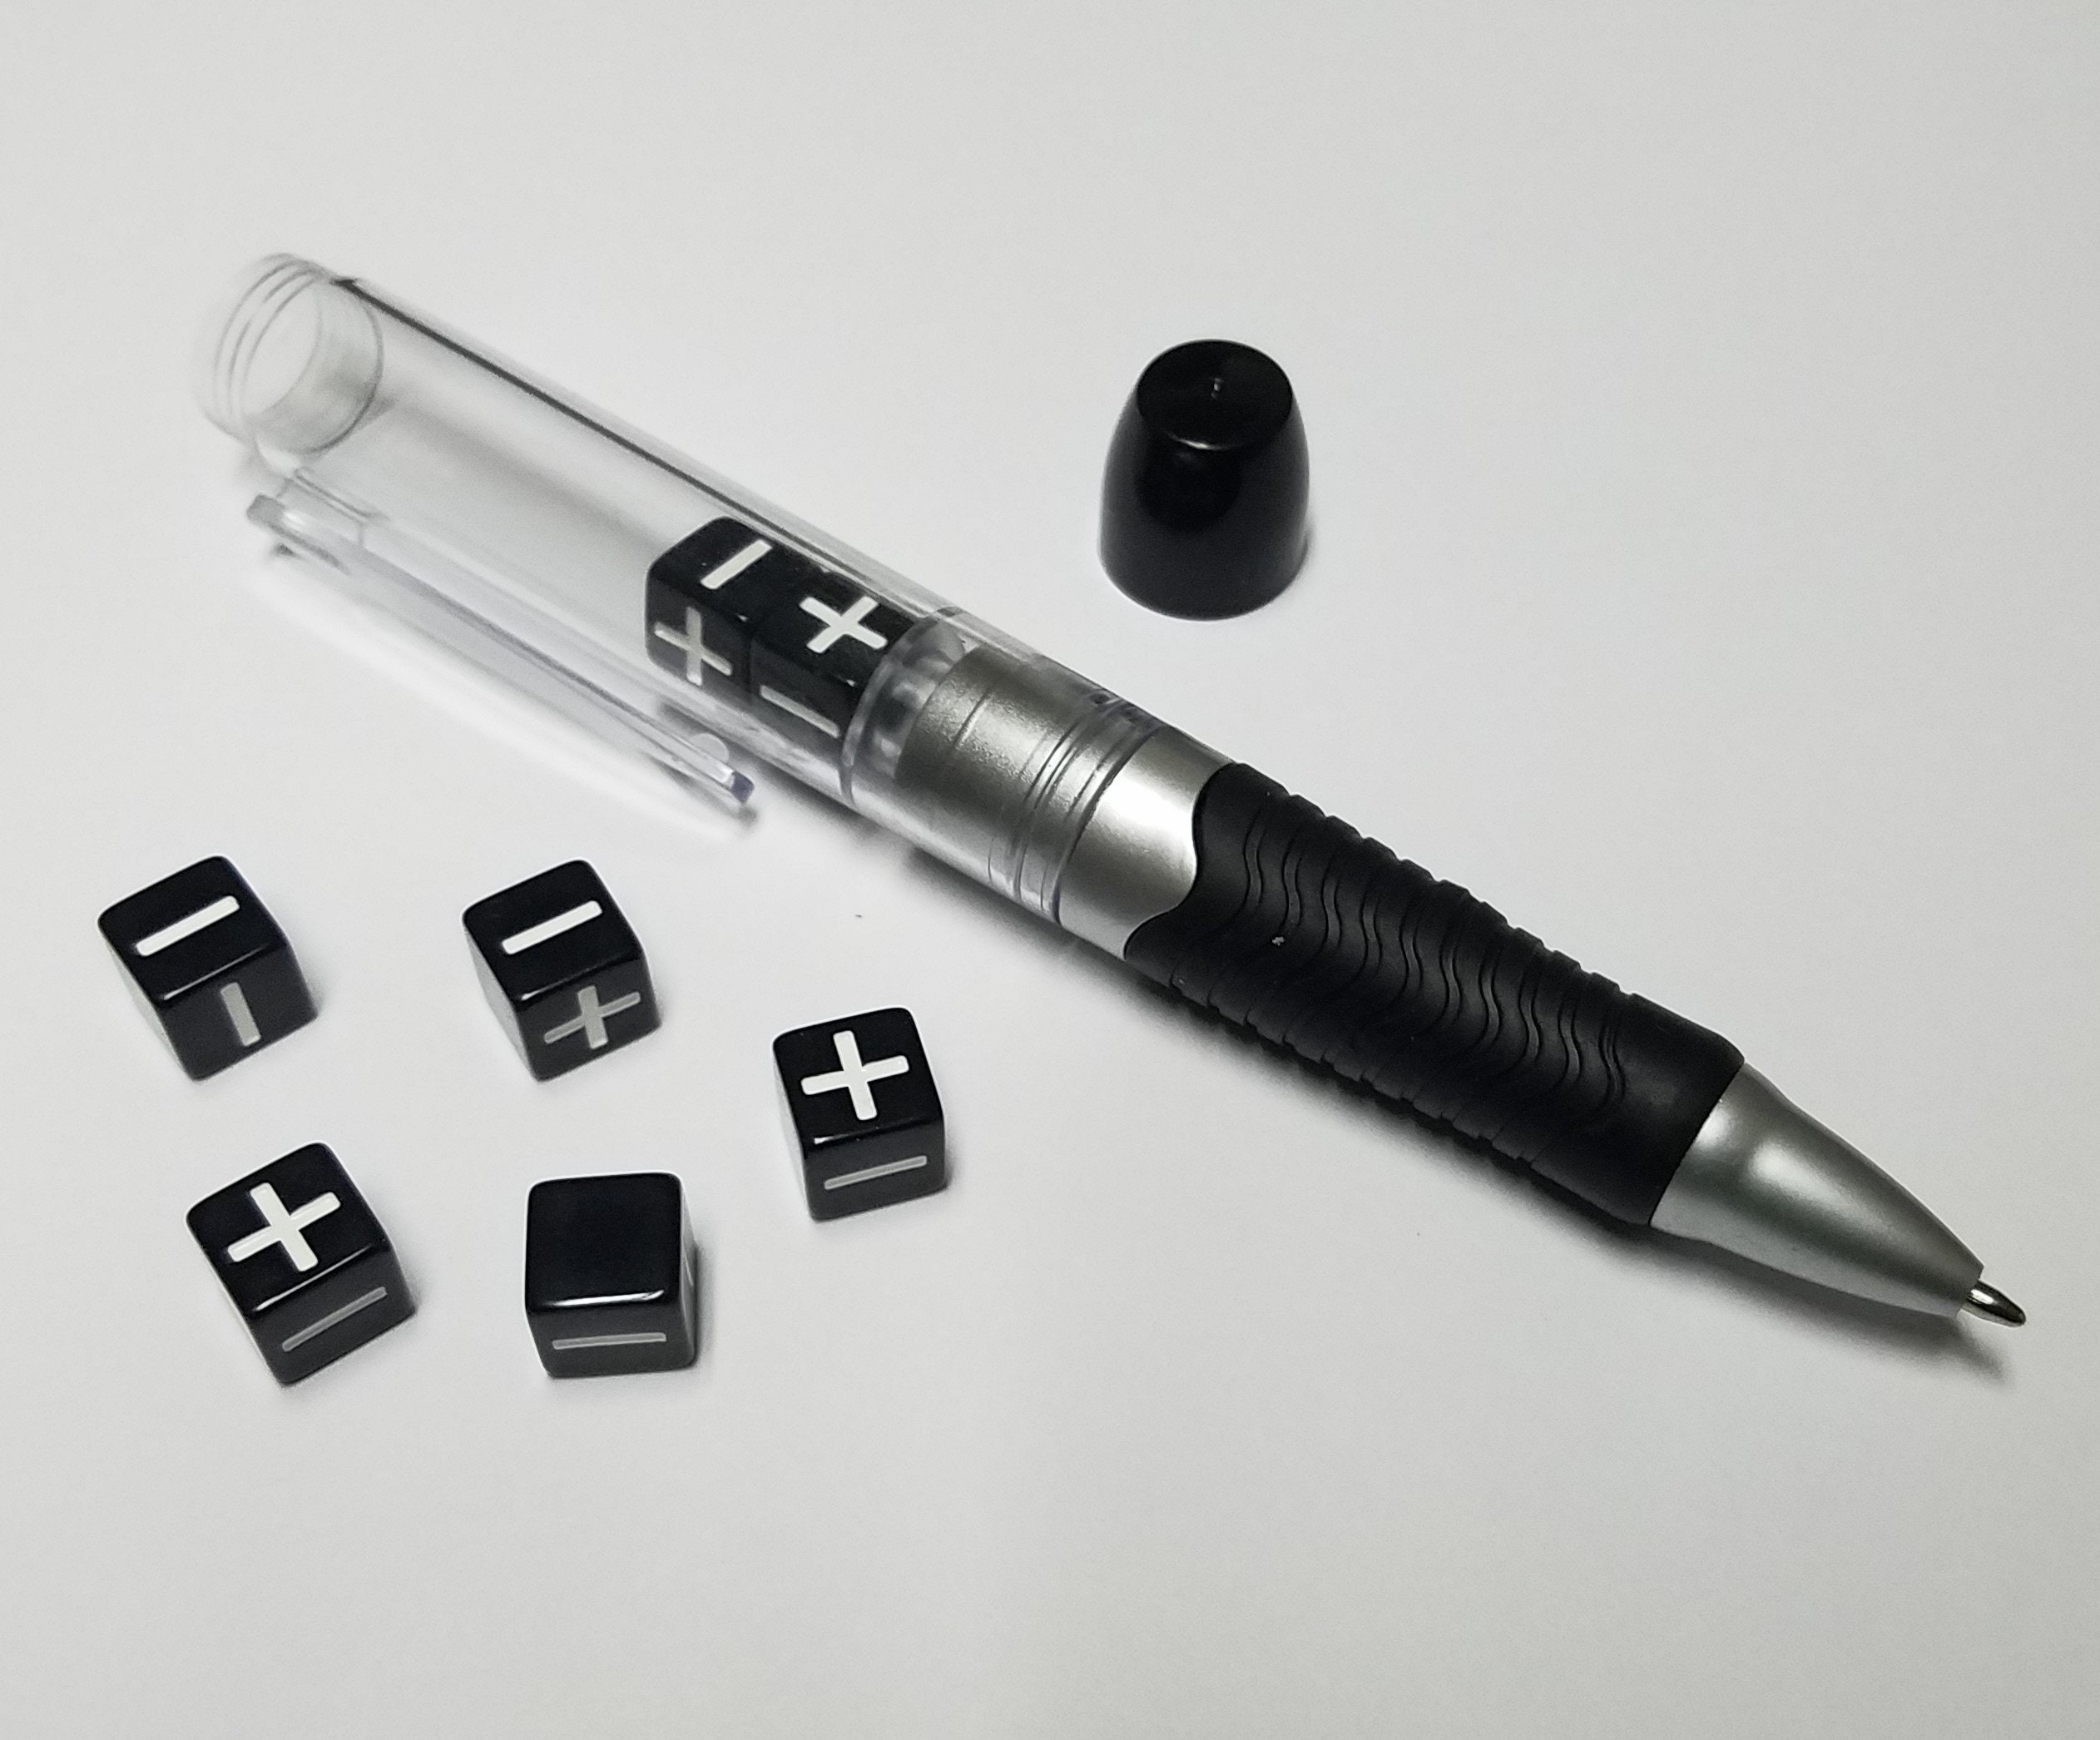 5D Diamond Painting Tool Kit Roller Drill Pens Tray DIY Art 